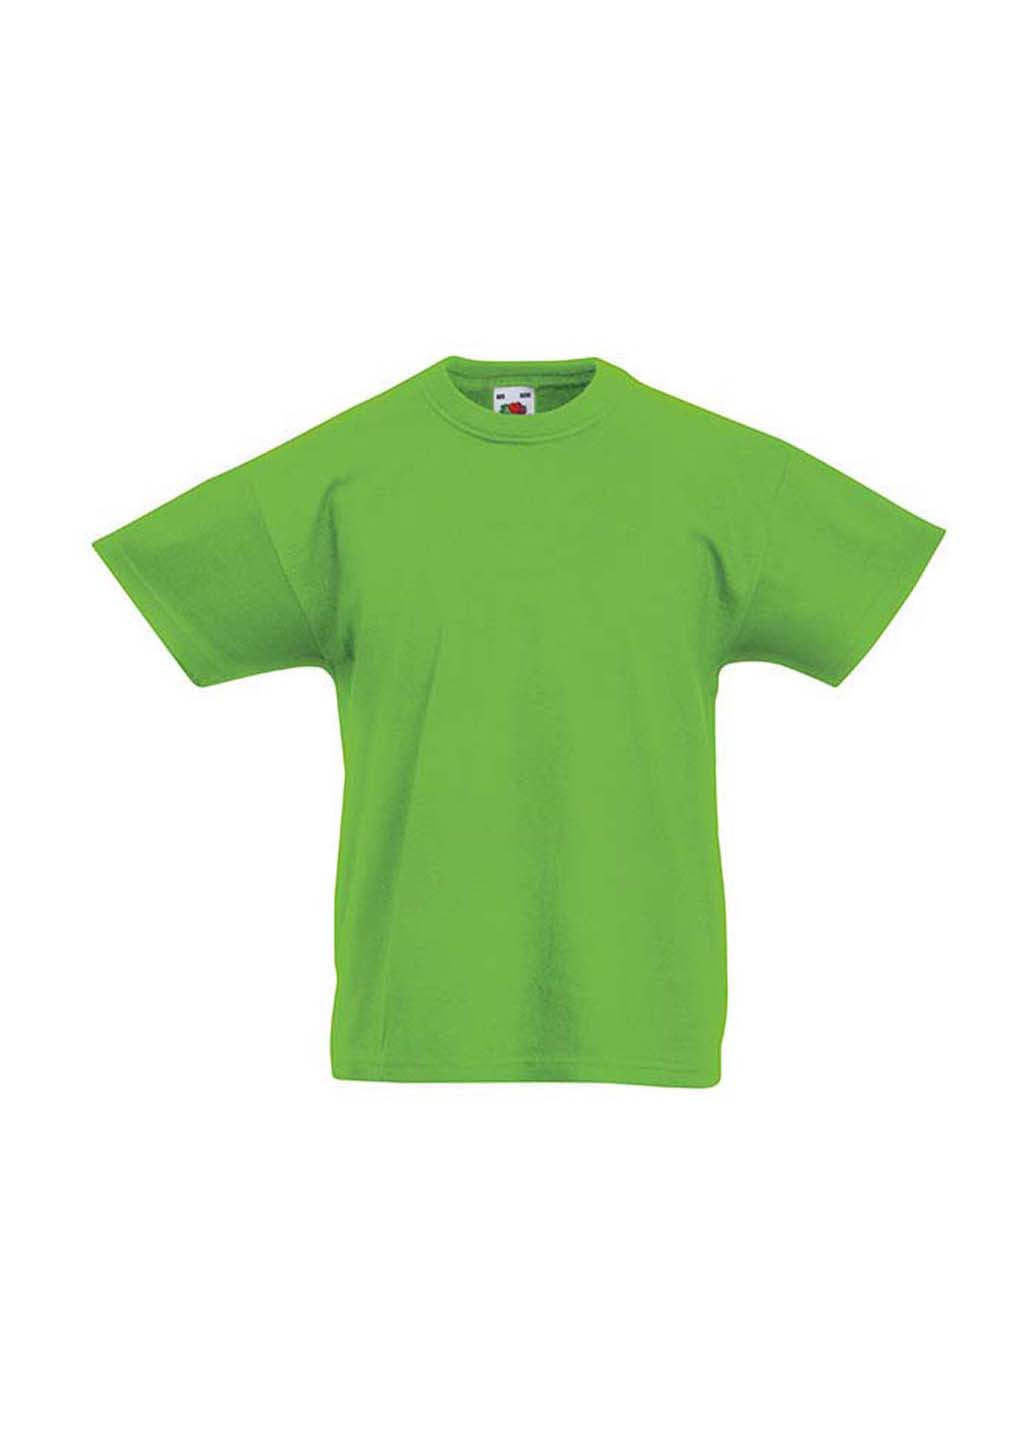 Лаймовая демисезонная футболка Fruit of the Loom 0610190LM164